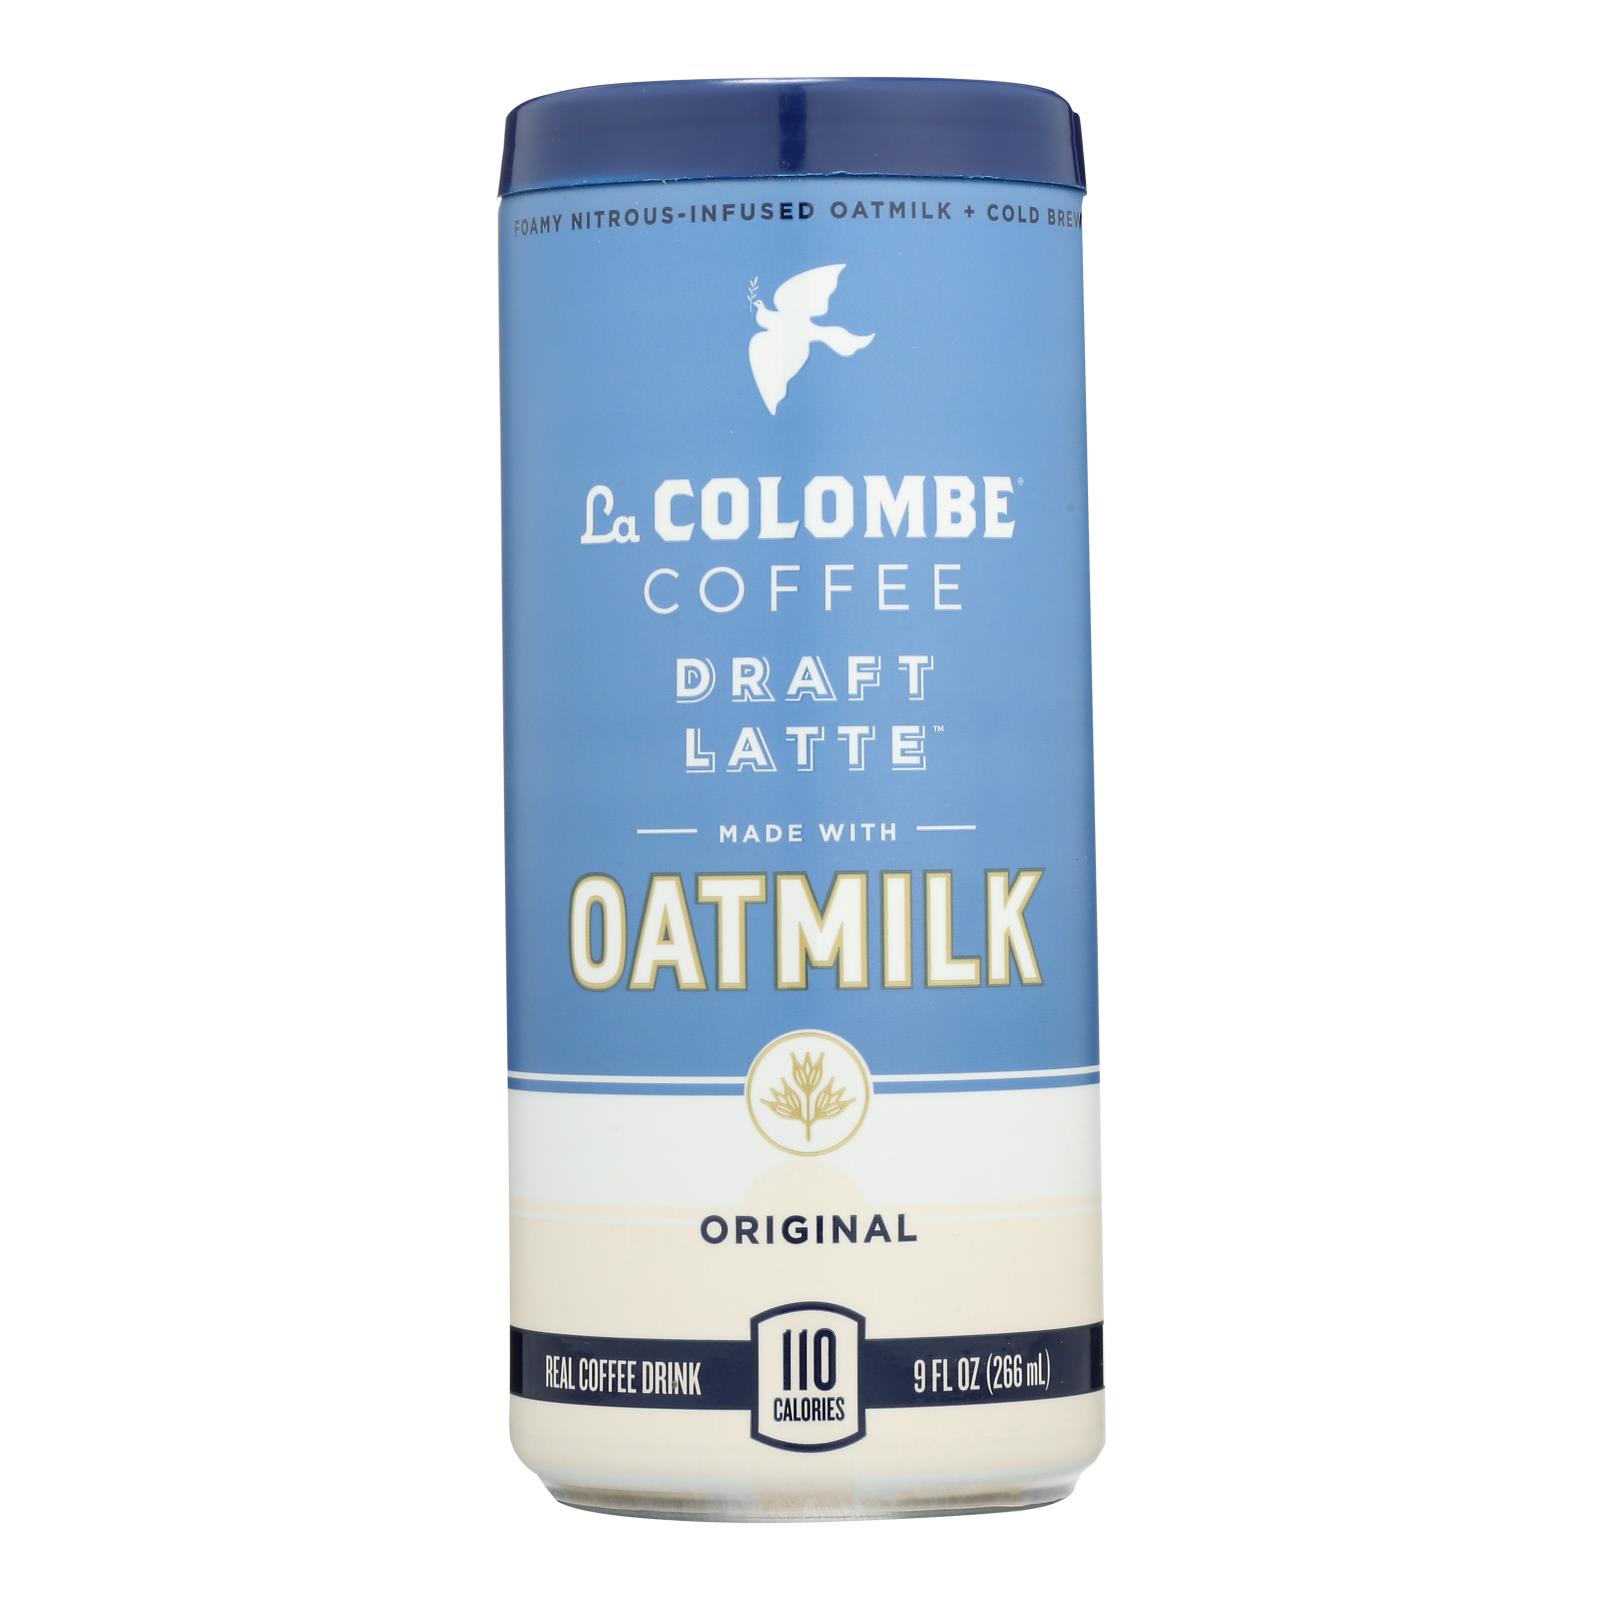 La Colombe - Drft Latte Otmlk Original - 8개 묶음상품 - 9 OZ